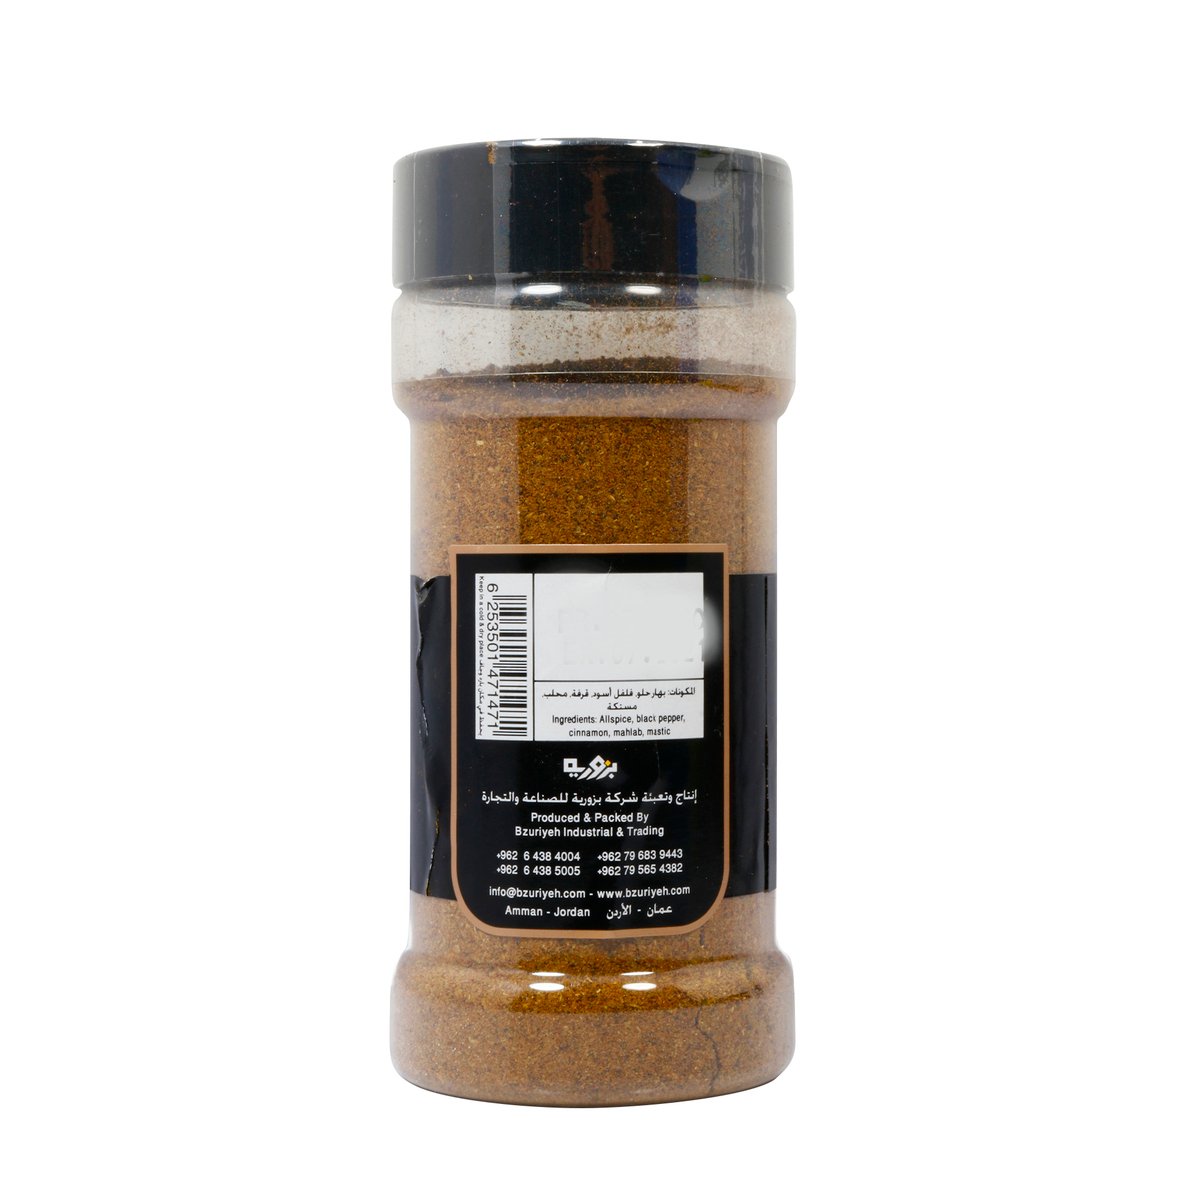 Bzuriyeh Meat Shawerma Spices 85g